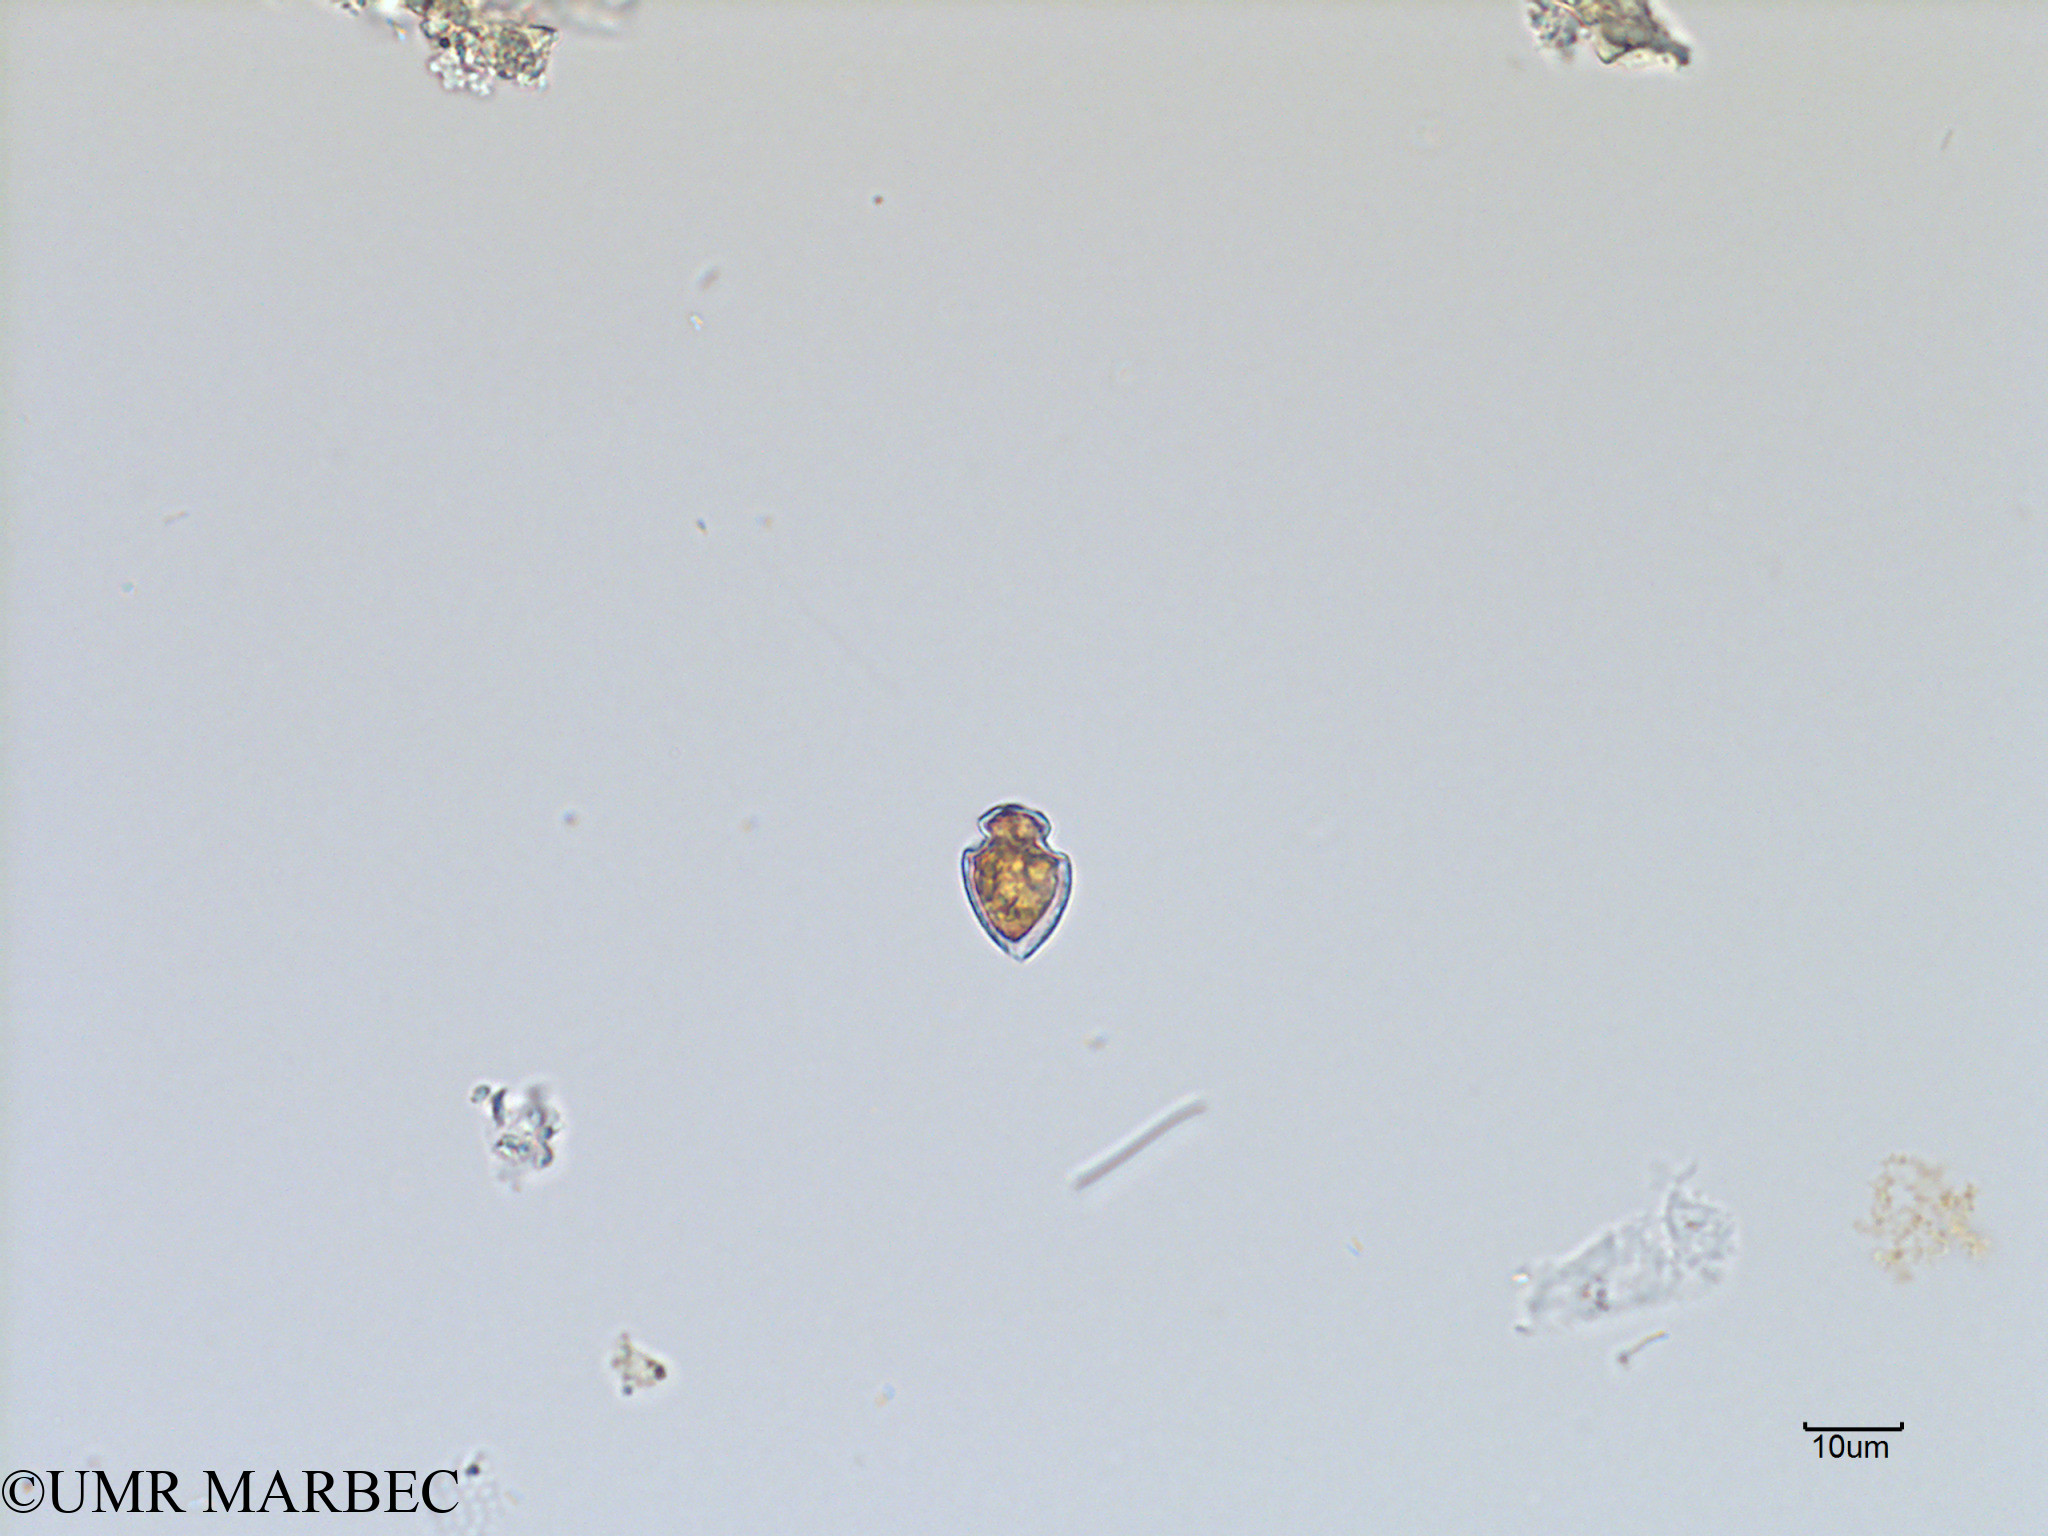 phyto/Scattered_Islands/iles_glorieuses/SIREME November 2015/Oxytoxum laticeps (SIREME-Glorieuses2015-ech8-241116-photo24 oxytoxum-2)(copy).jpg